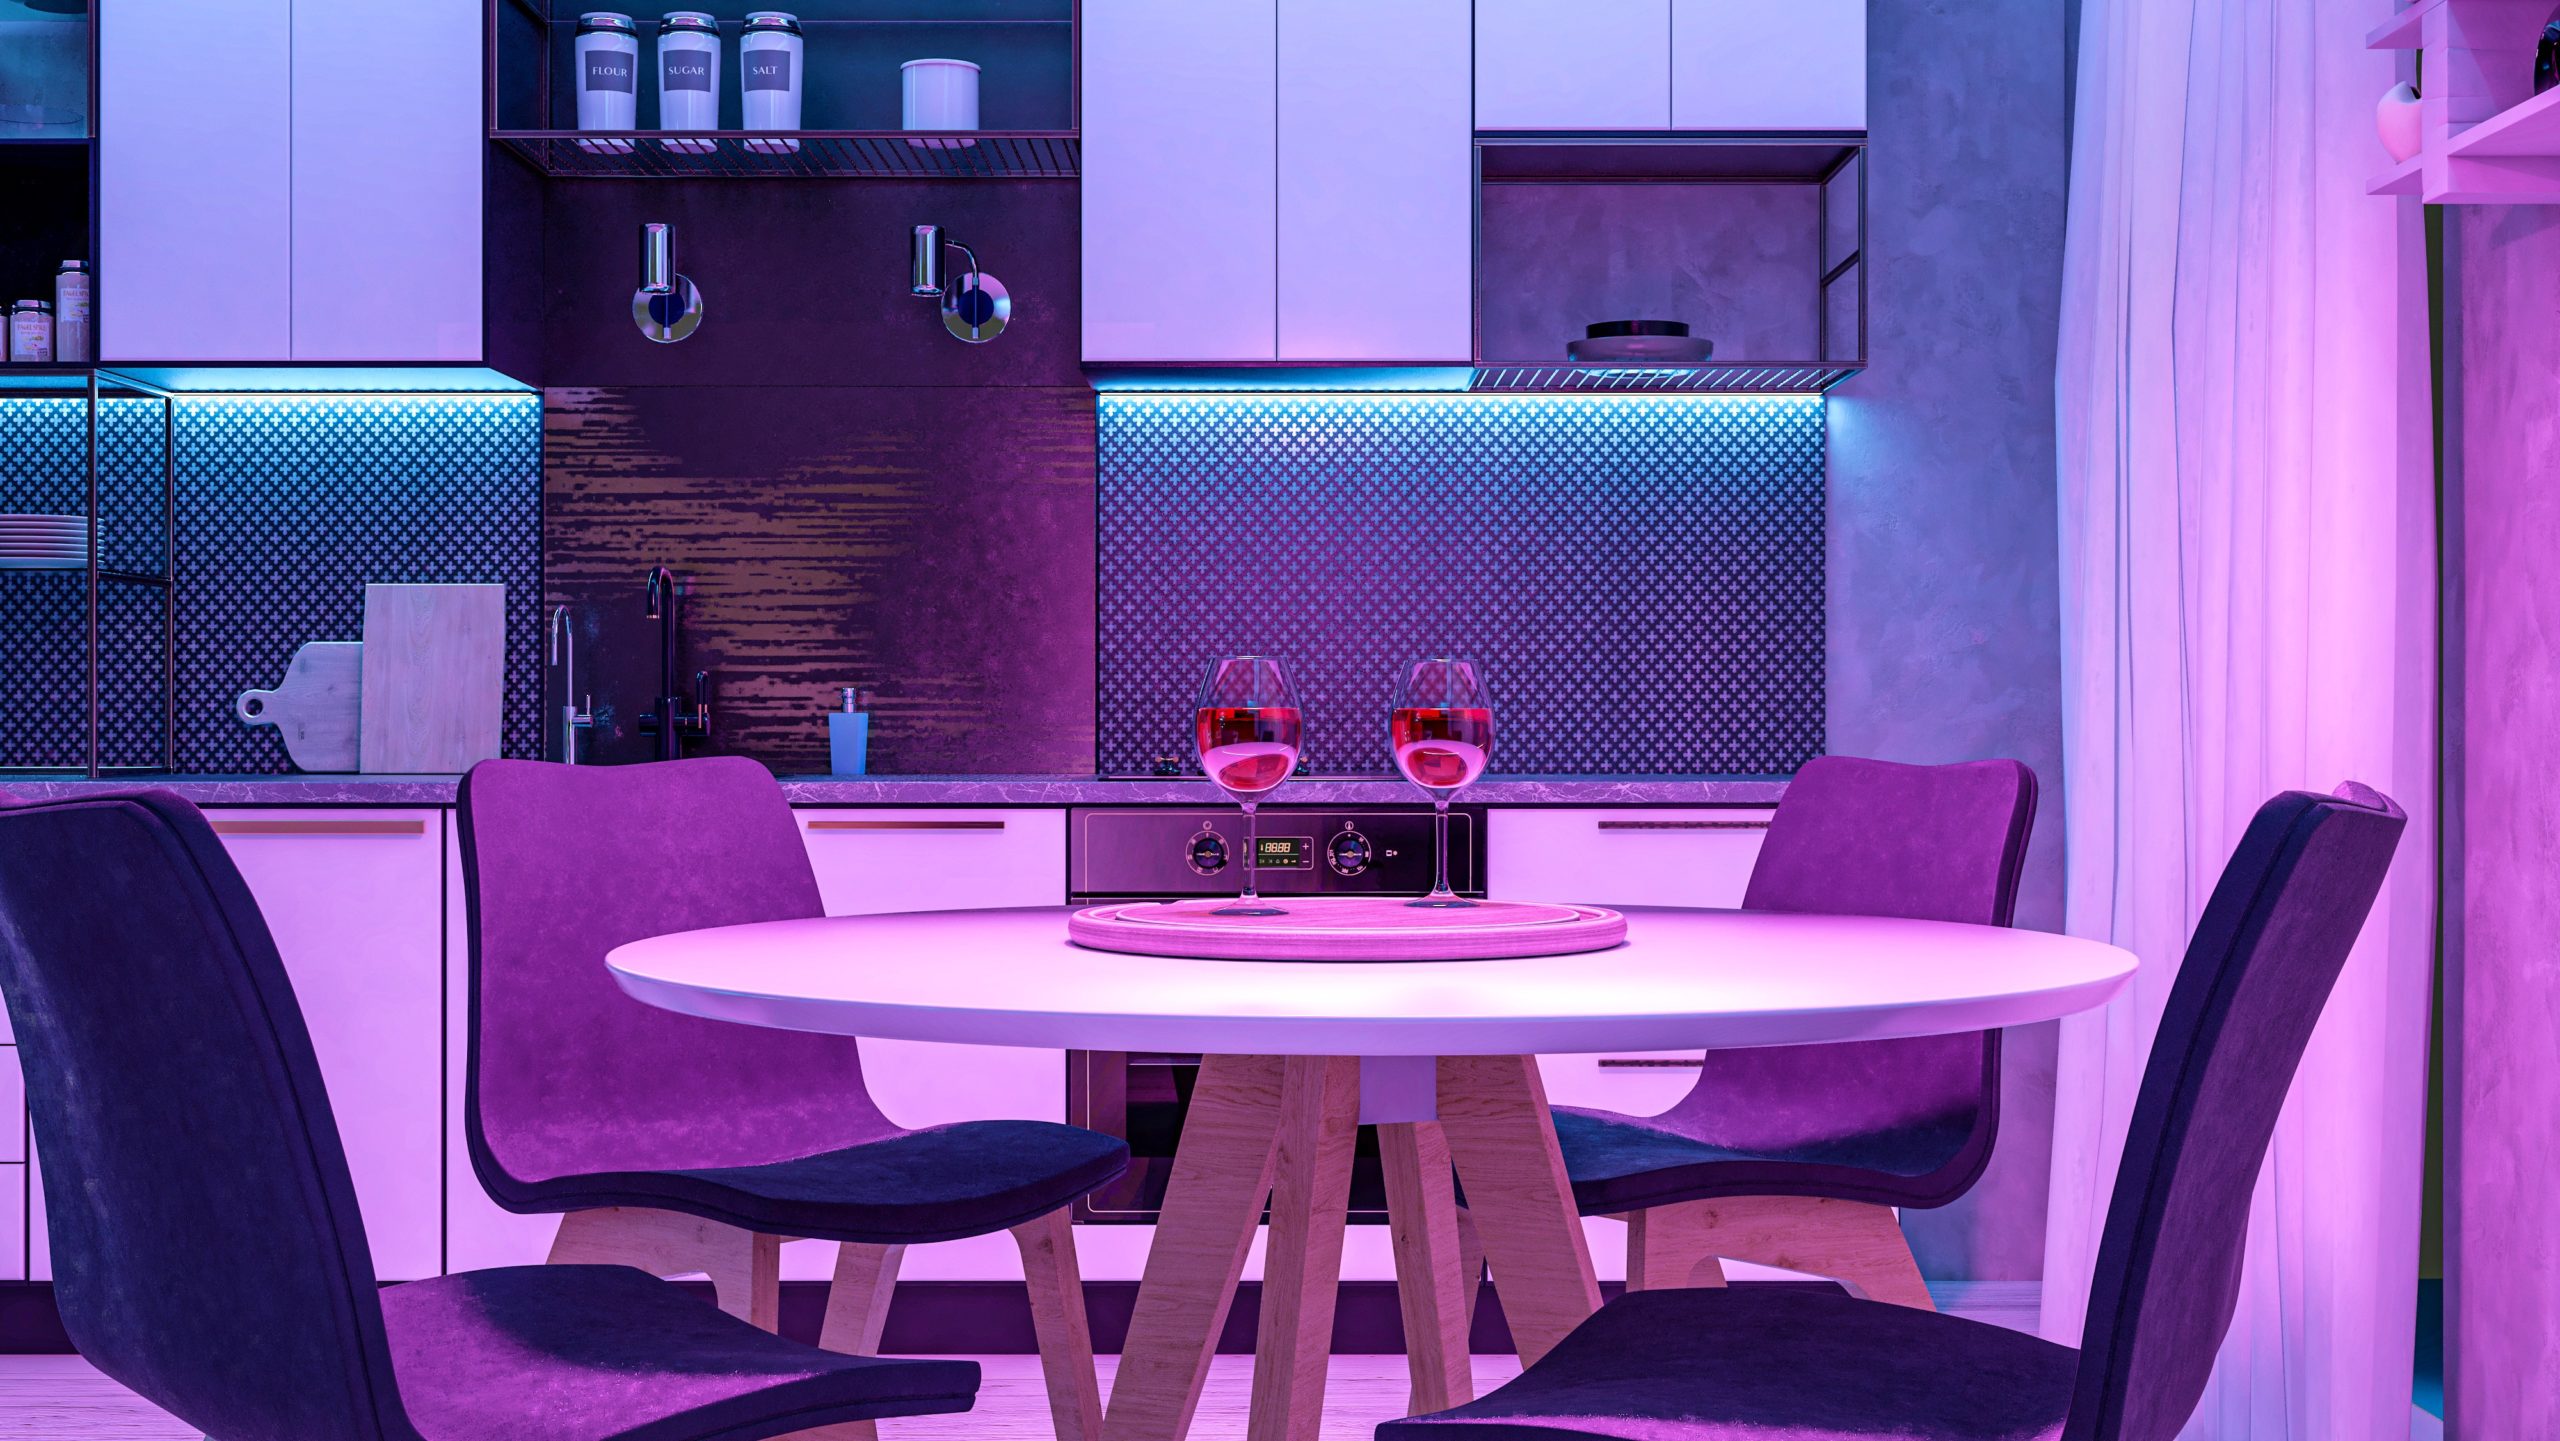 <img src="purple.jpg" alt="purple ambient lighting in kitchen"/> 